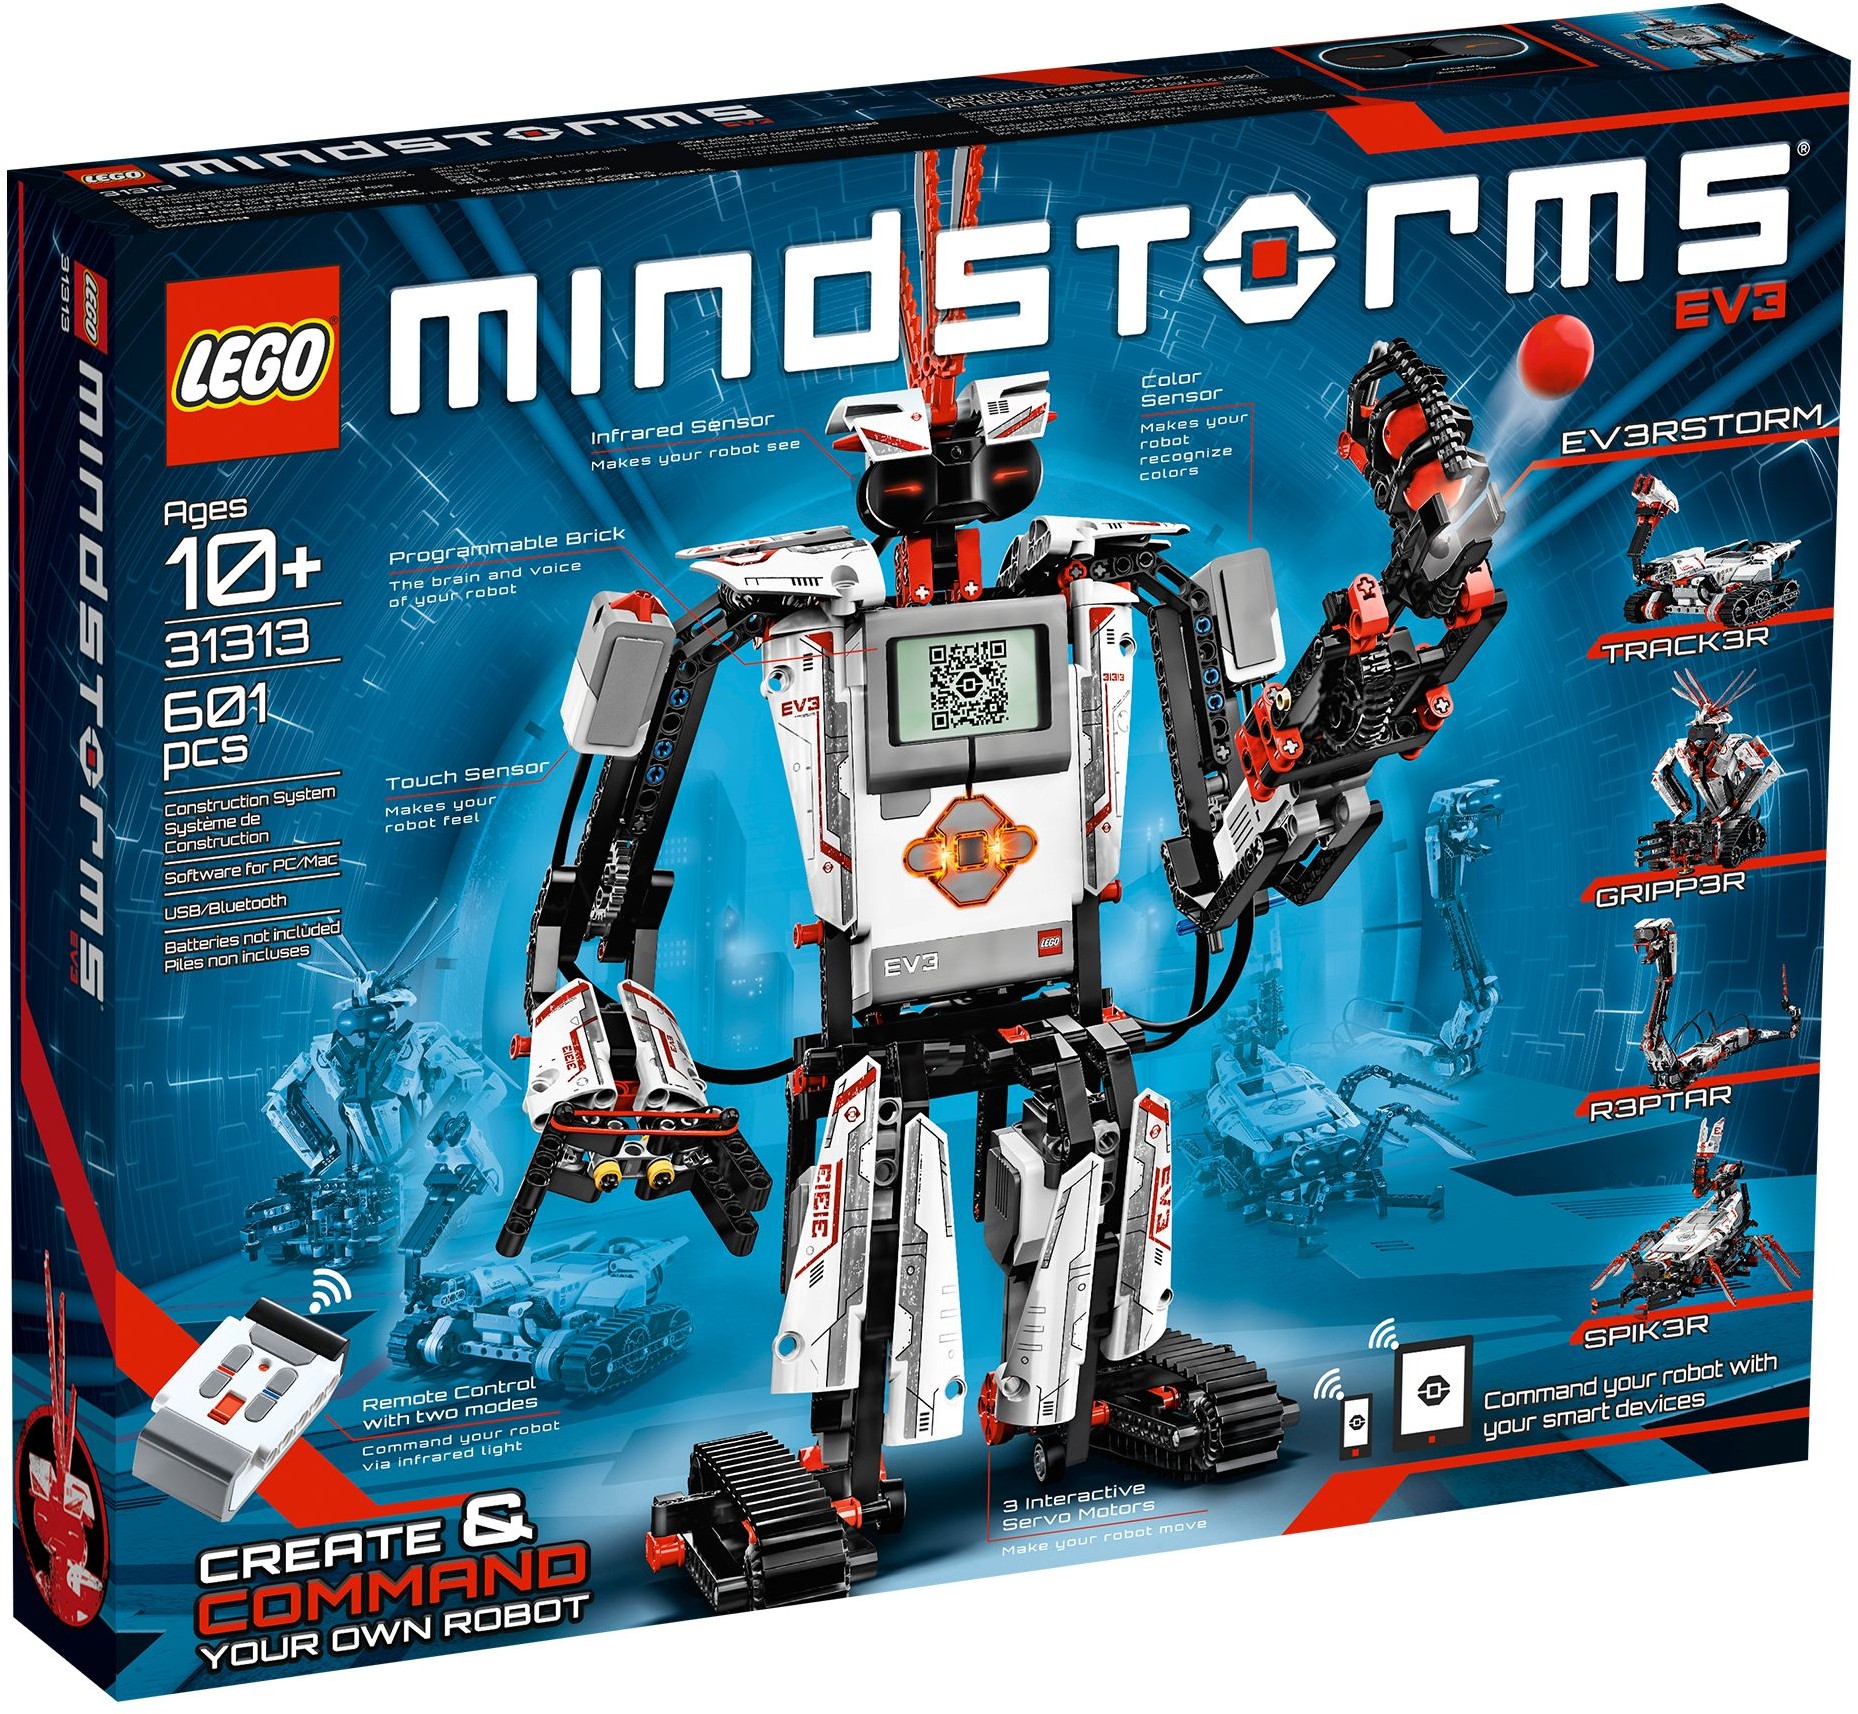 LEGO Mindstorms to discontinued Brickset